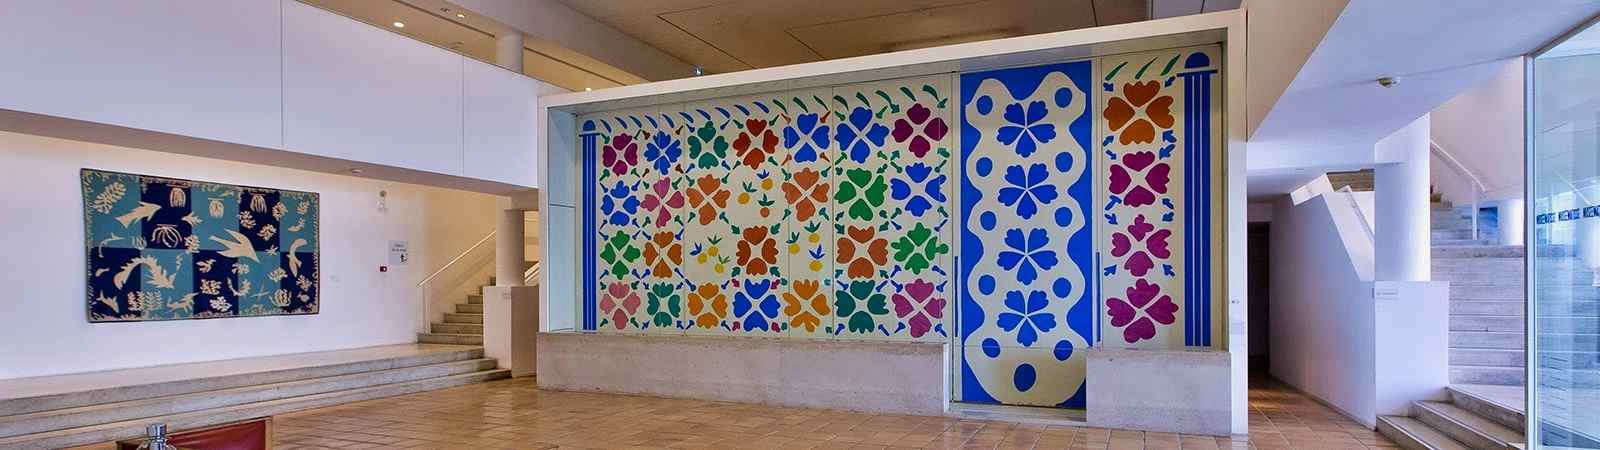 Frank Worthley onszelf Speels Matisse Museum Nice • CityXee Travelguide